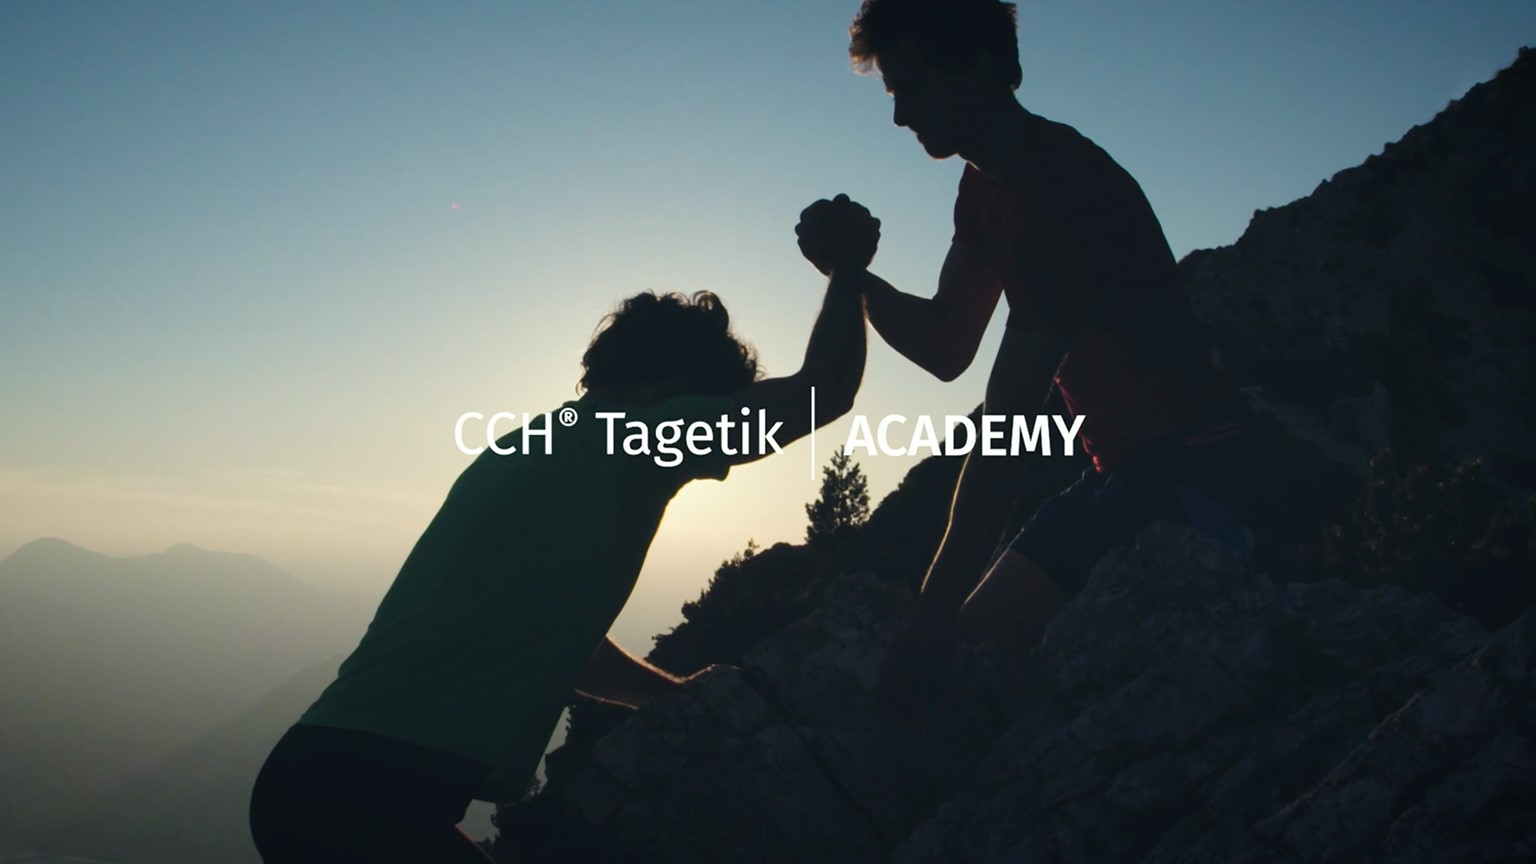 CCH Tagetik Academy